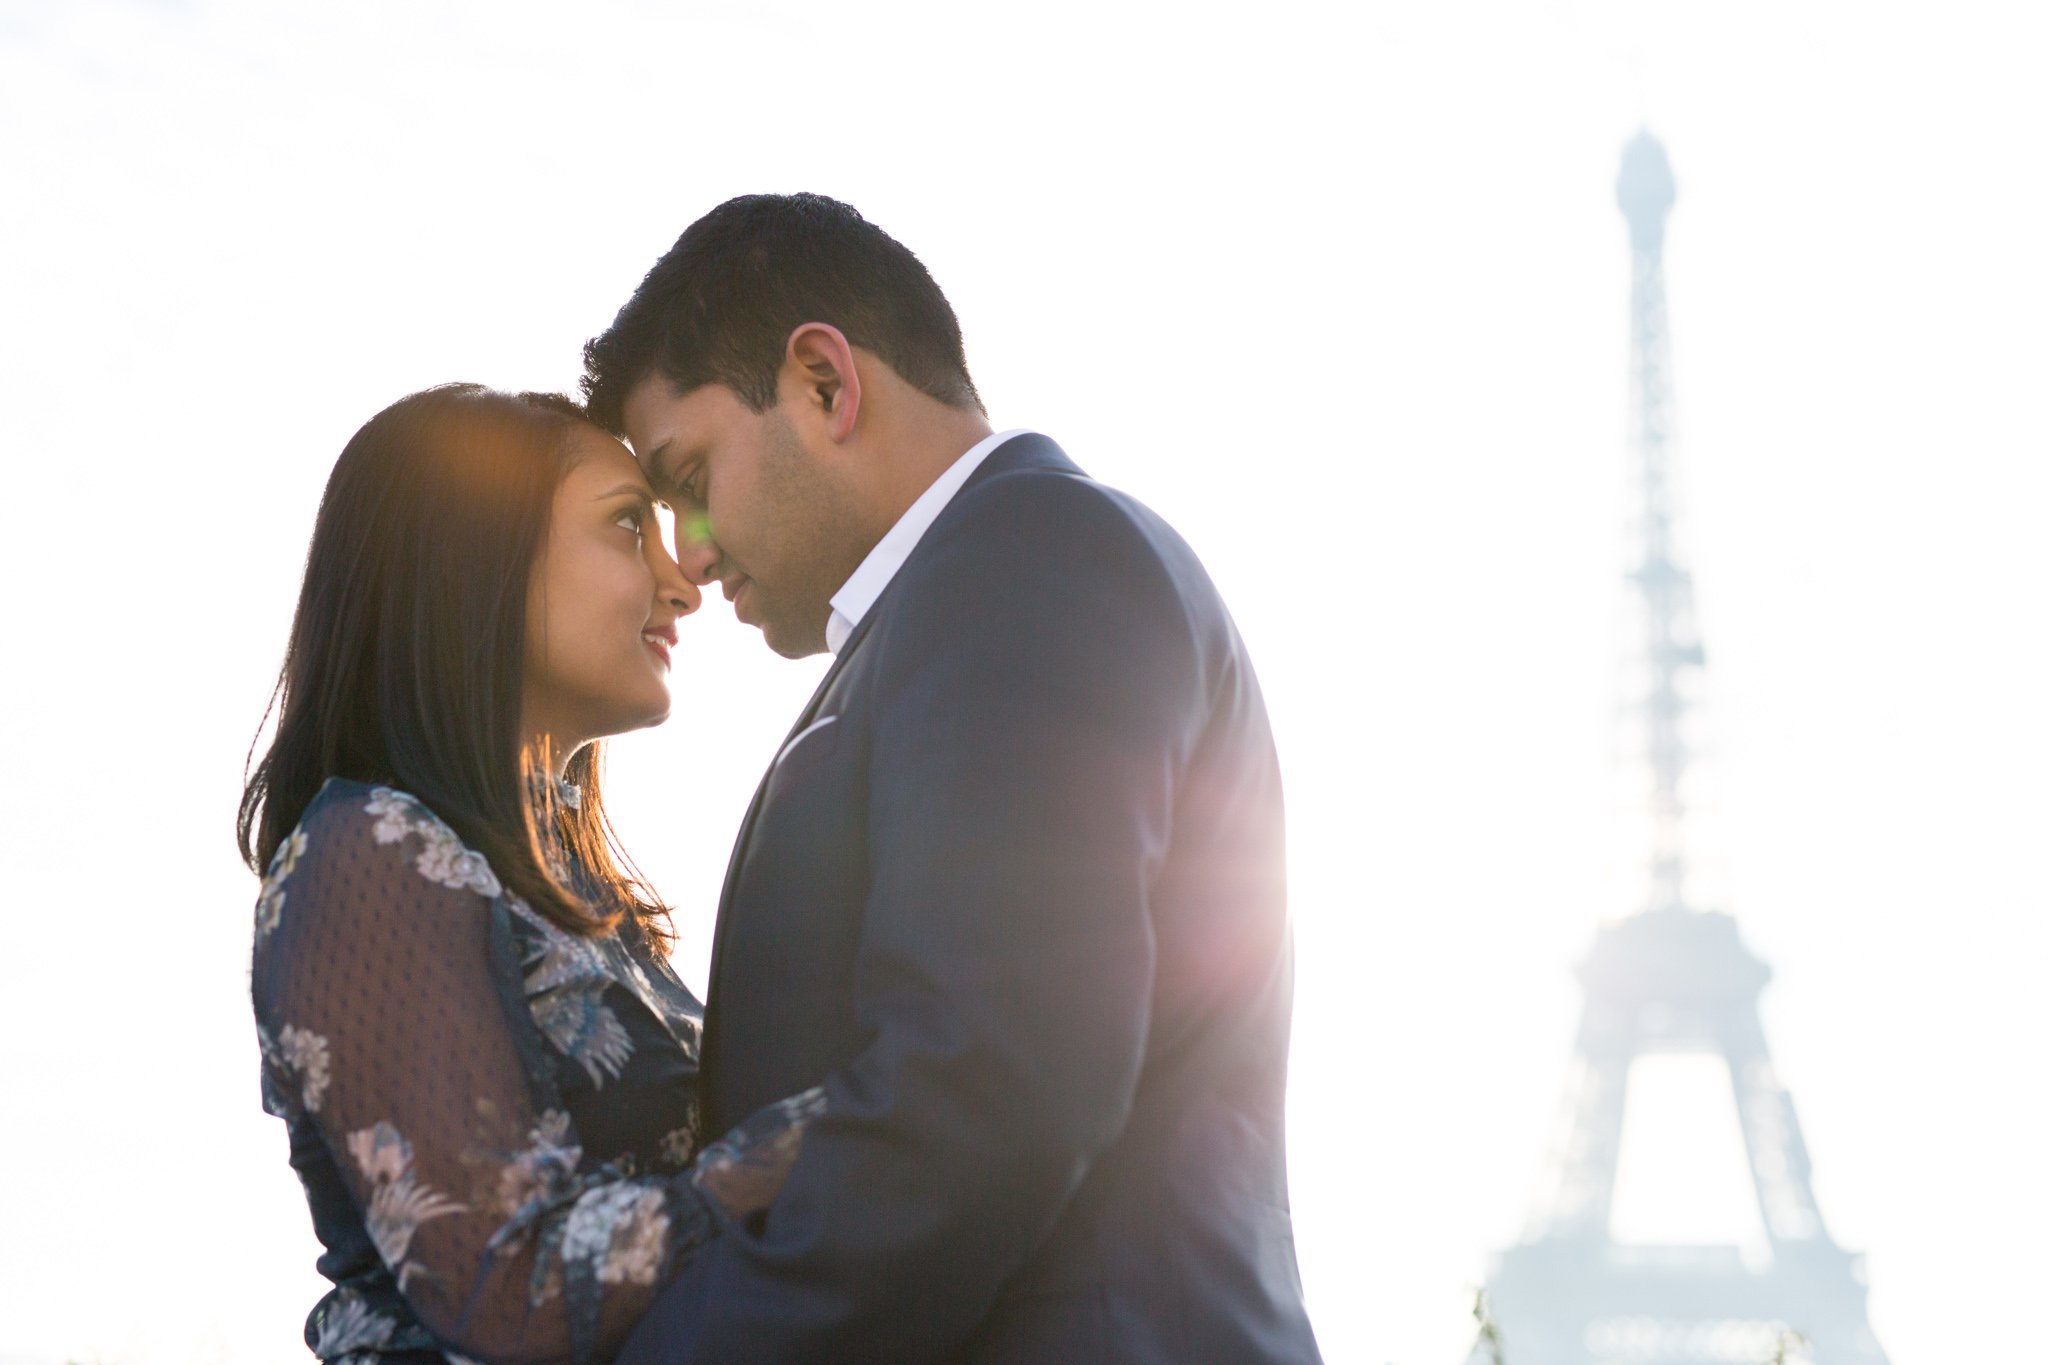  engaged-couple-embrace-in-paris-sun 